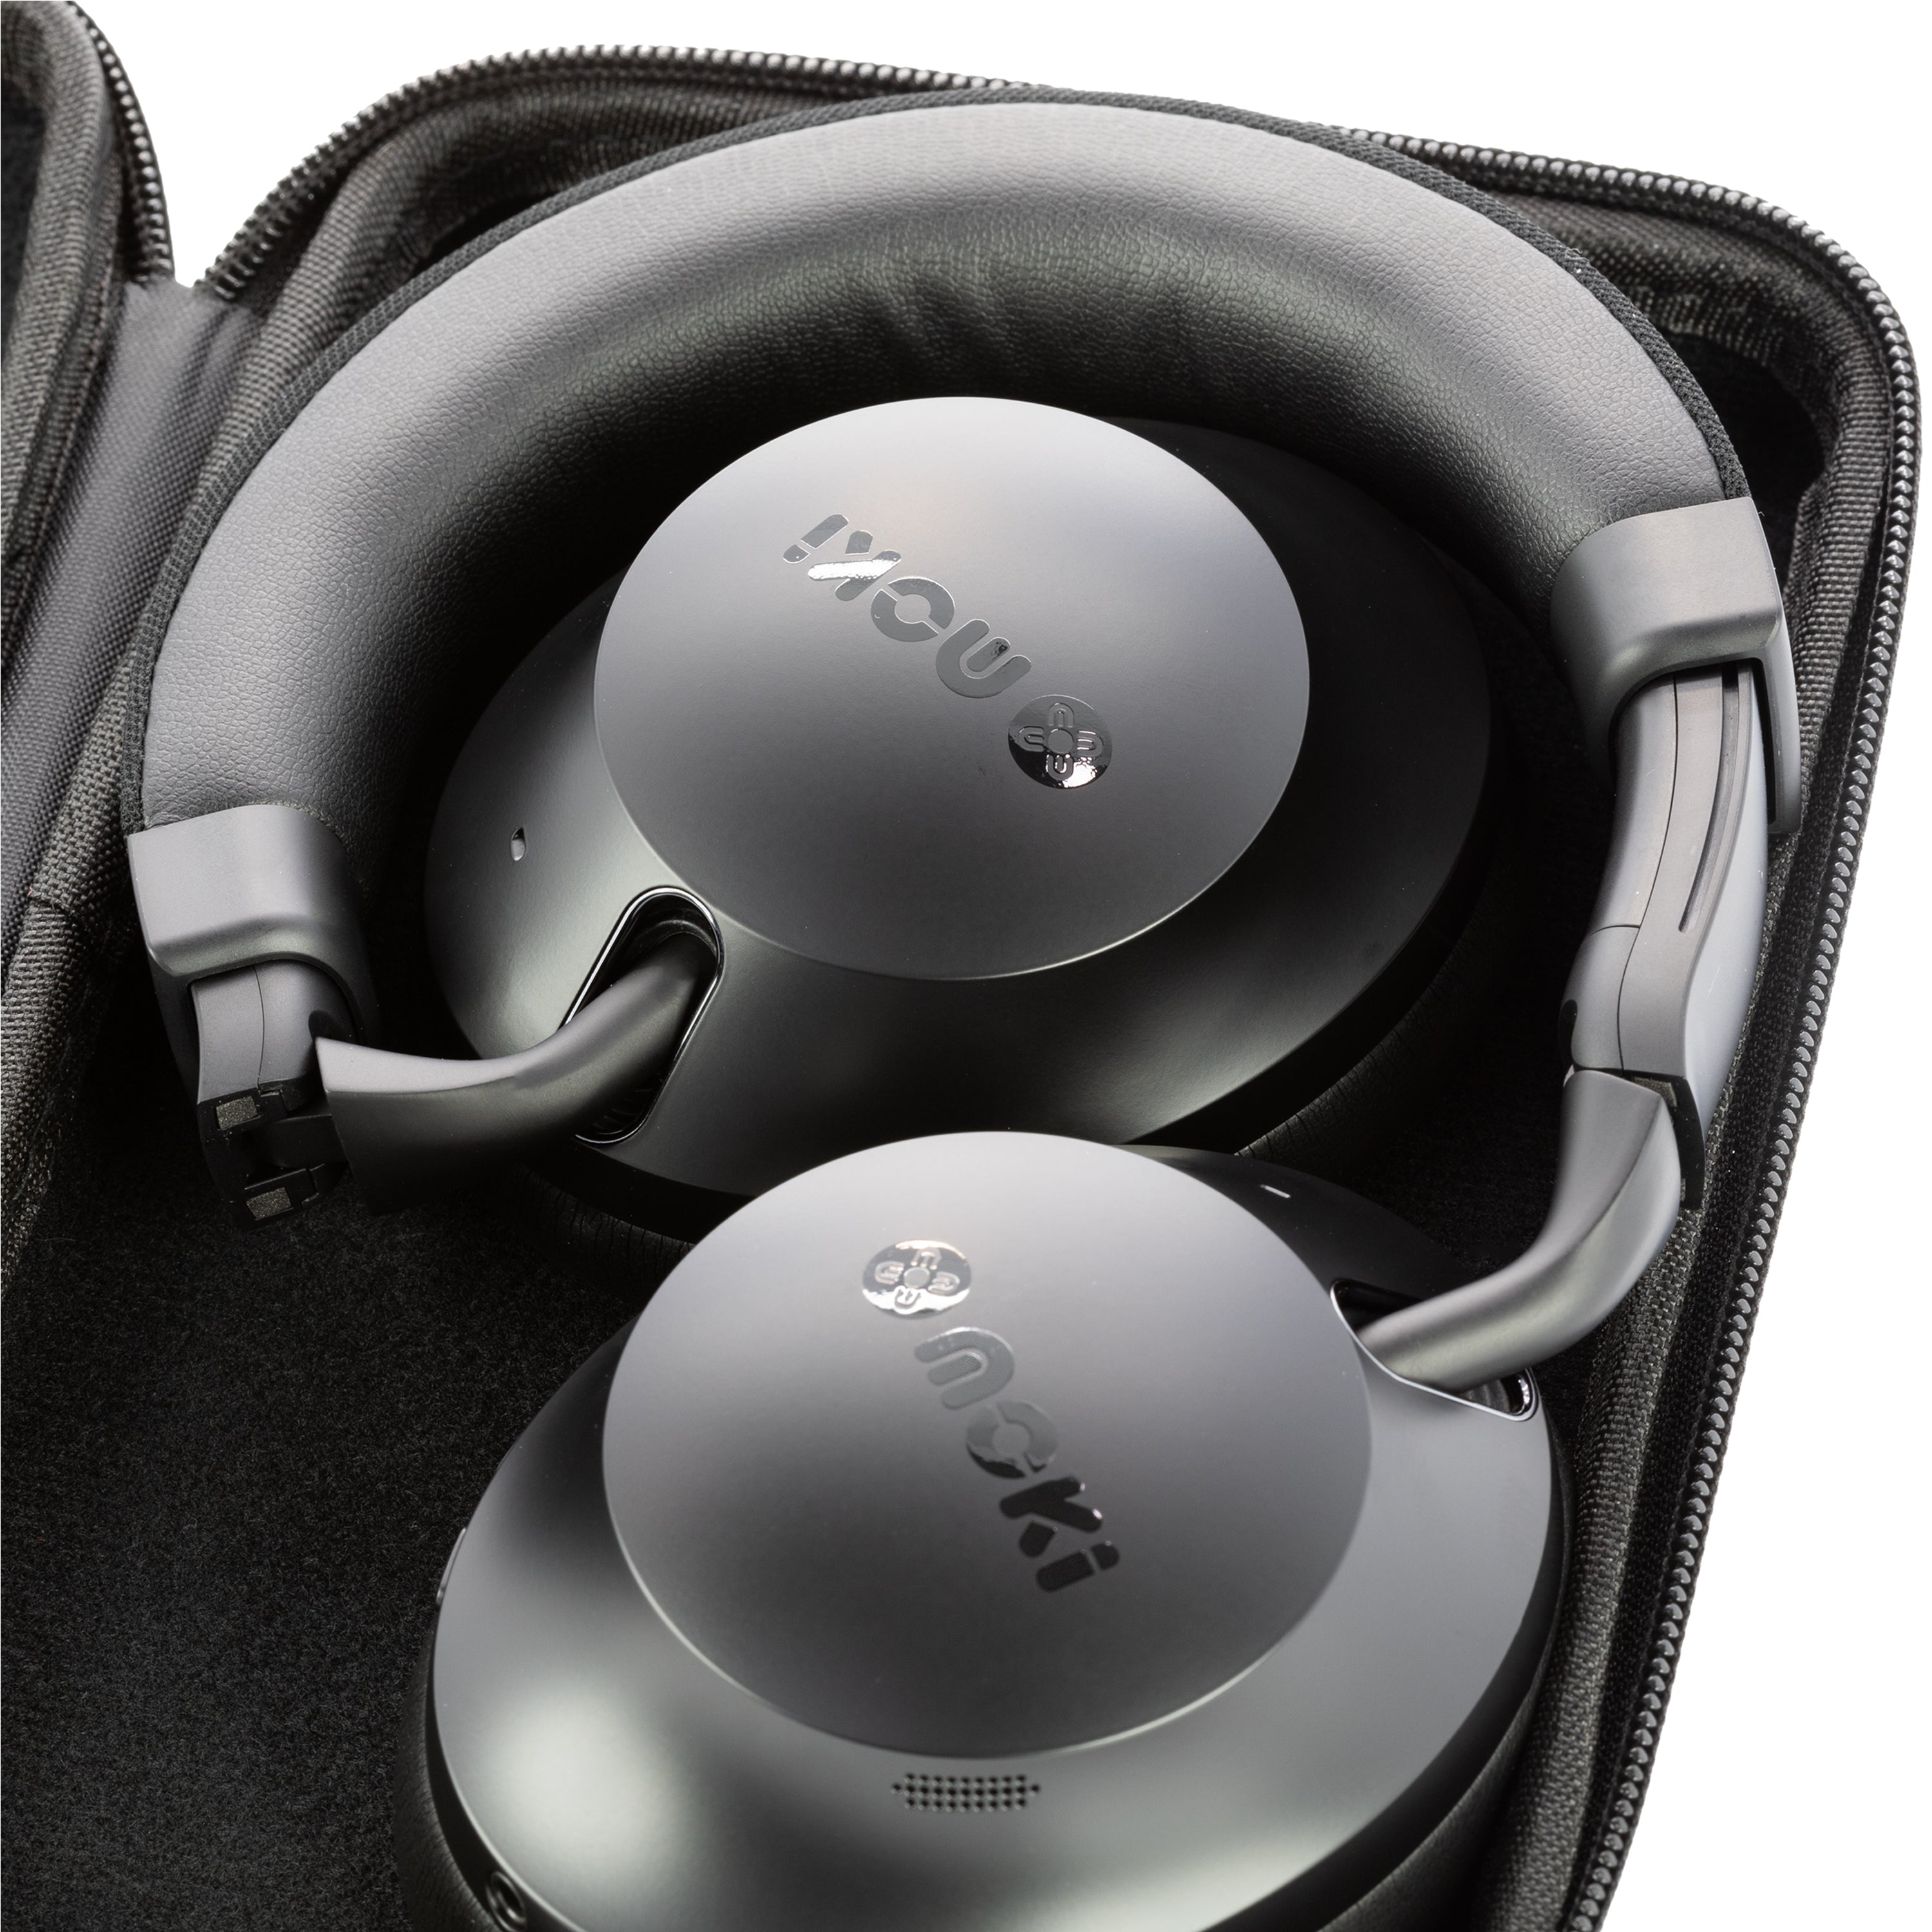 ANC G-2 Active Noise Cancellation Wireless Headphones